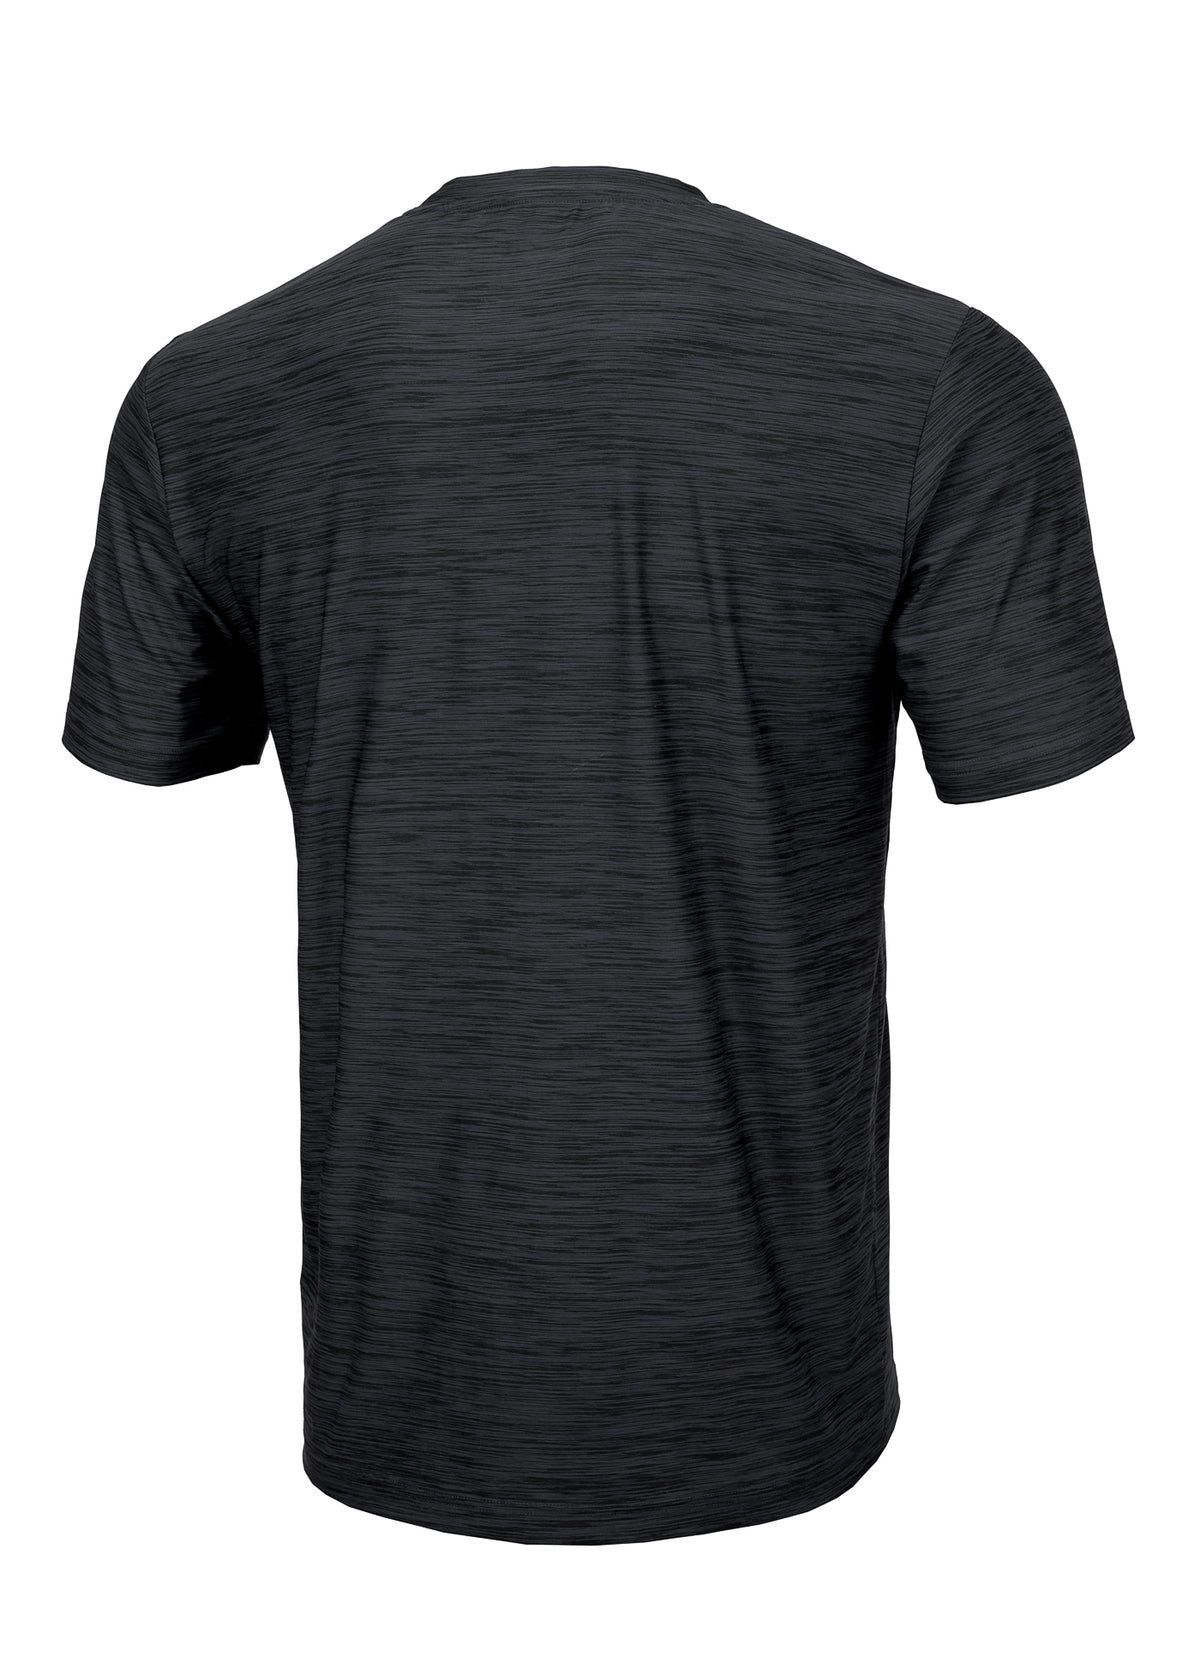 NO LOGO Black Melange T-shirt.